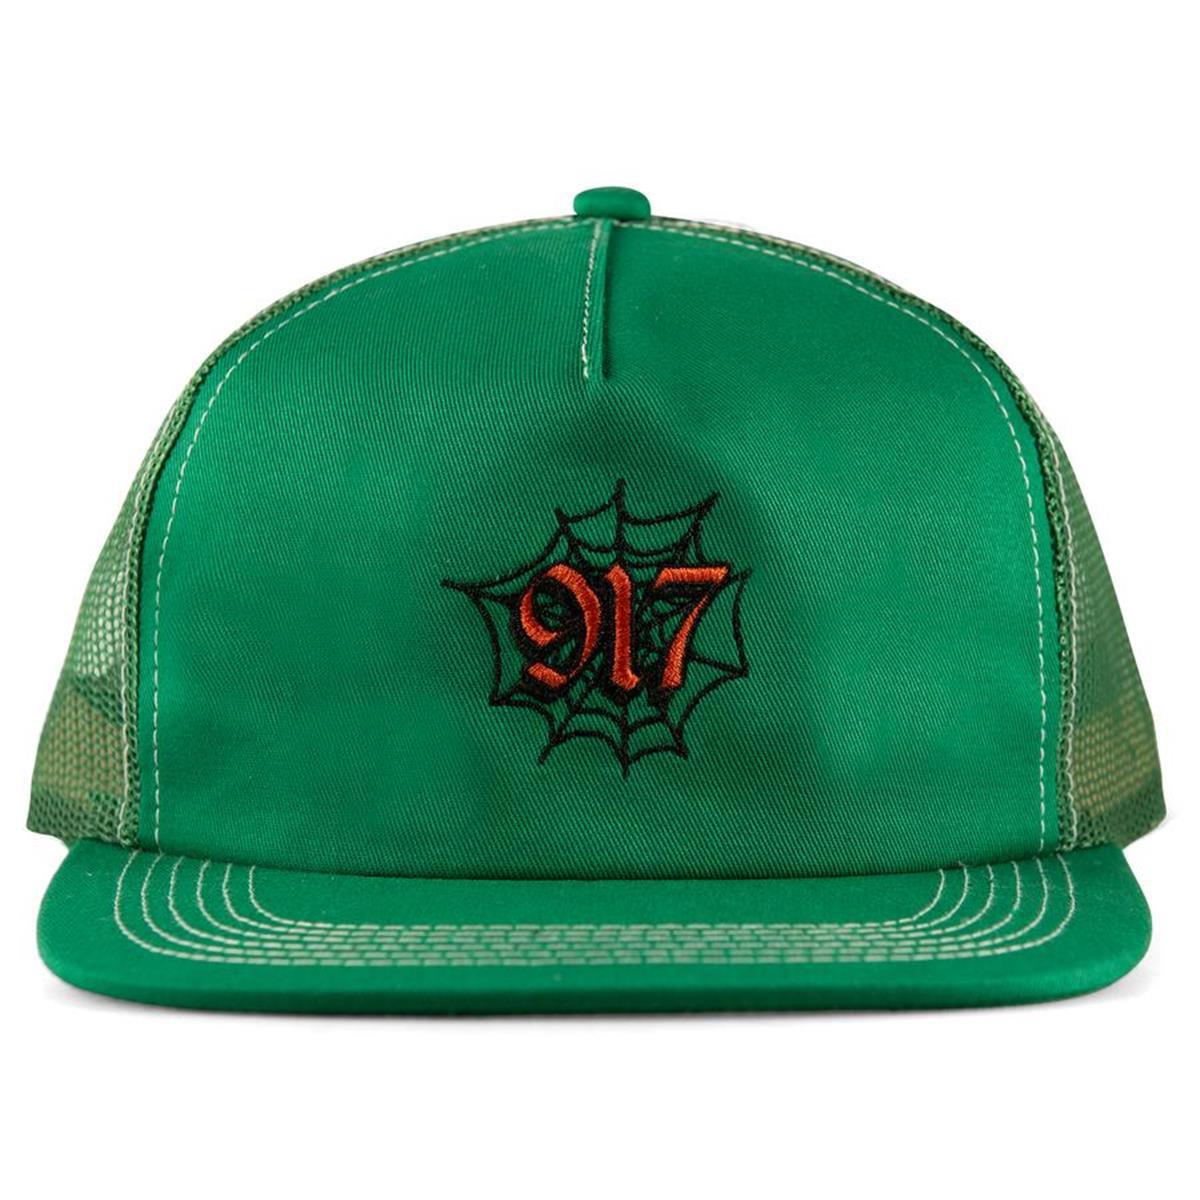 Call Me 917 Web Green Trucker Hat